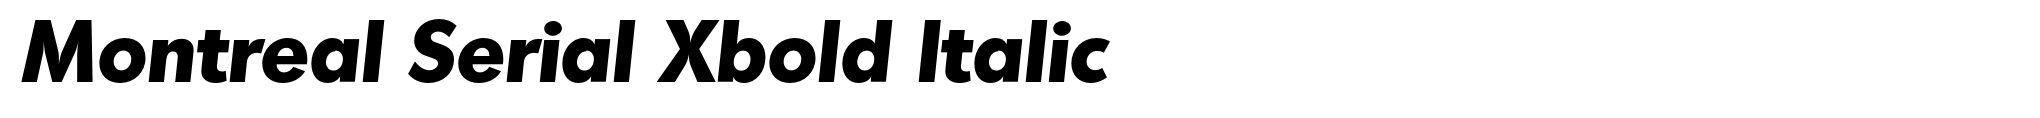 Montreal Serial Xbold Italic image